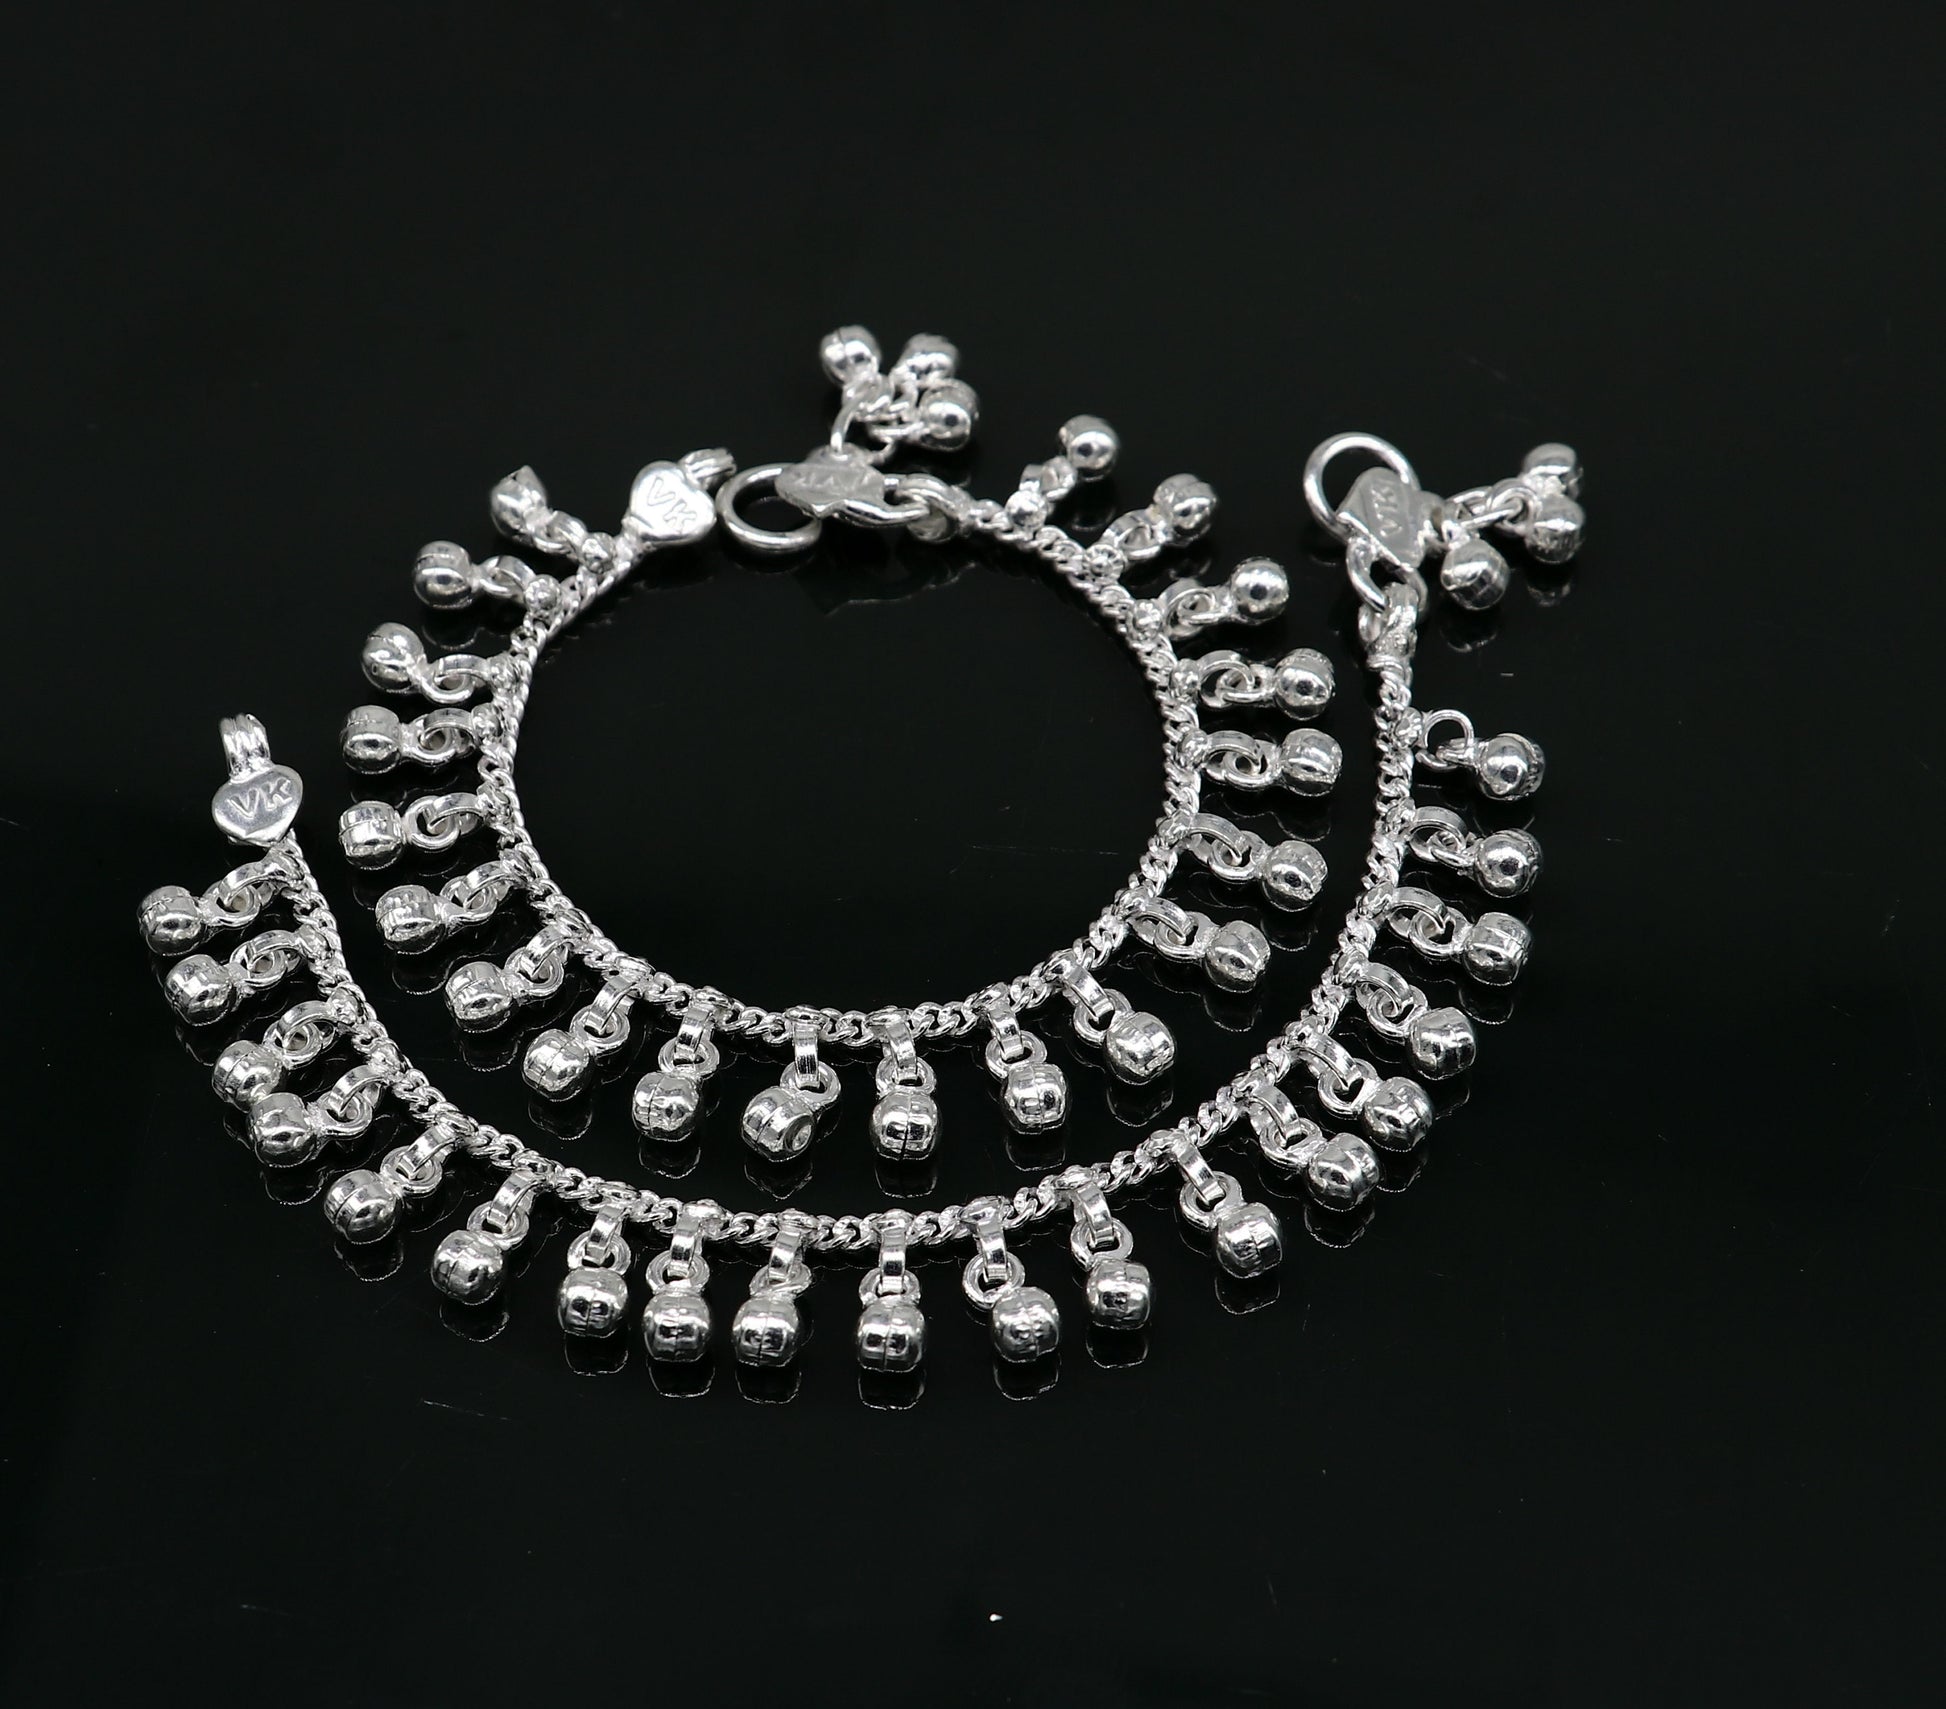 5" long Vintage design sterling silver handmade amazing waved noisy hanging drops bells baby anklet, ankle bracelet, charm bracelet ank430 - TRIBAL ORNAMENTS